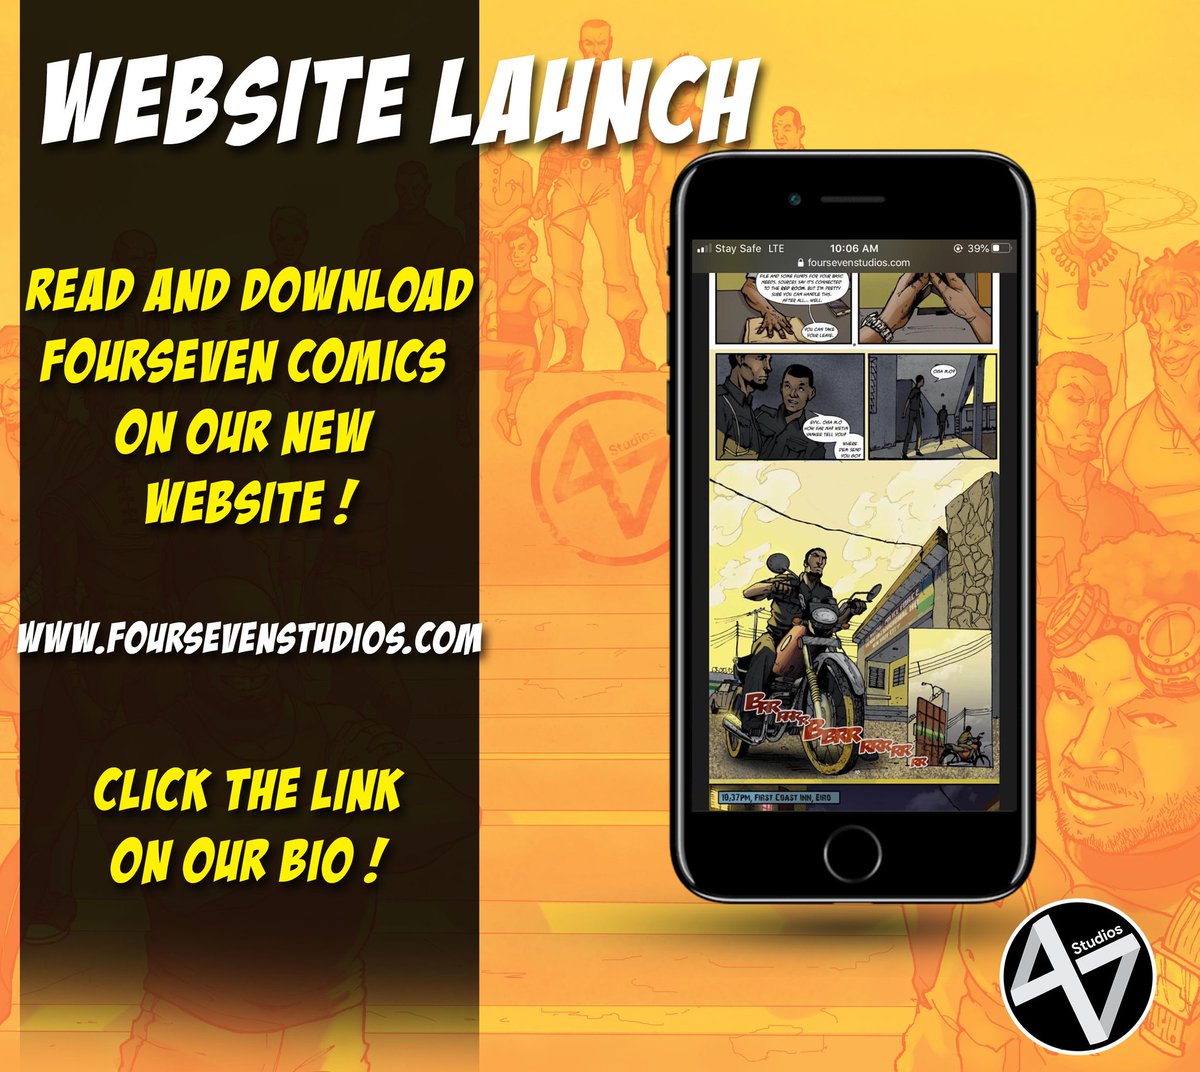 Website launch! Check it out...  foursevenstudios.com

#comics #onlinecomics #webtoon #nigeriancomics #NigeriaYouthsLiveMatter